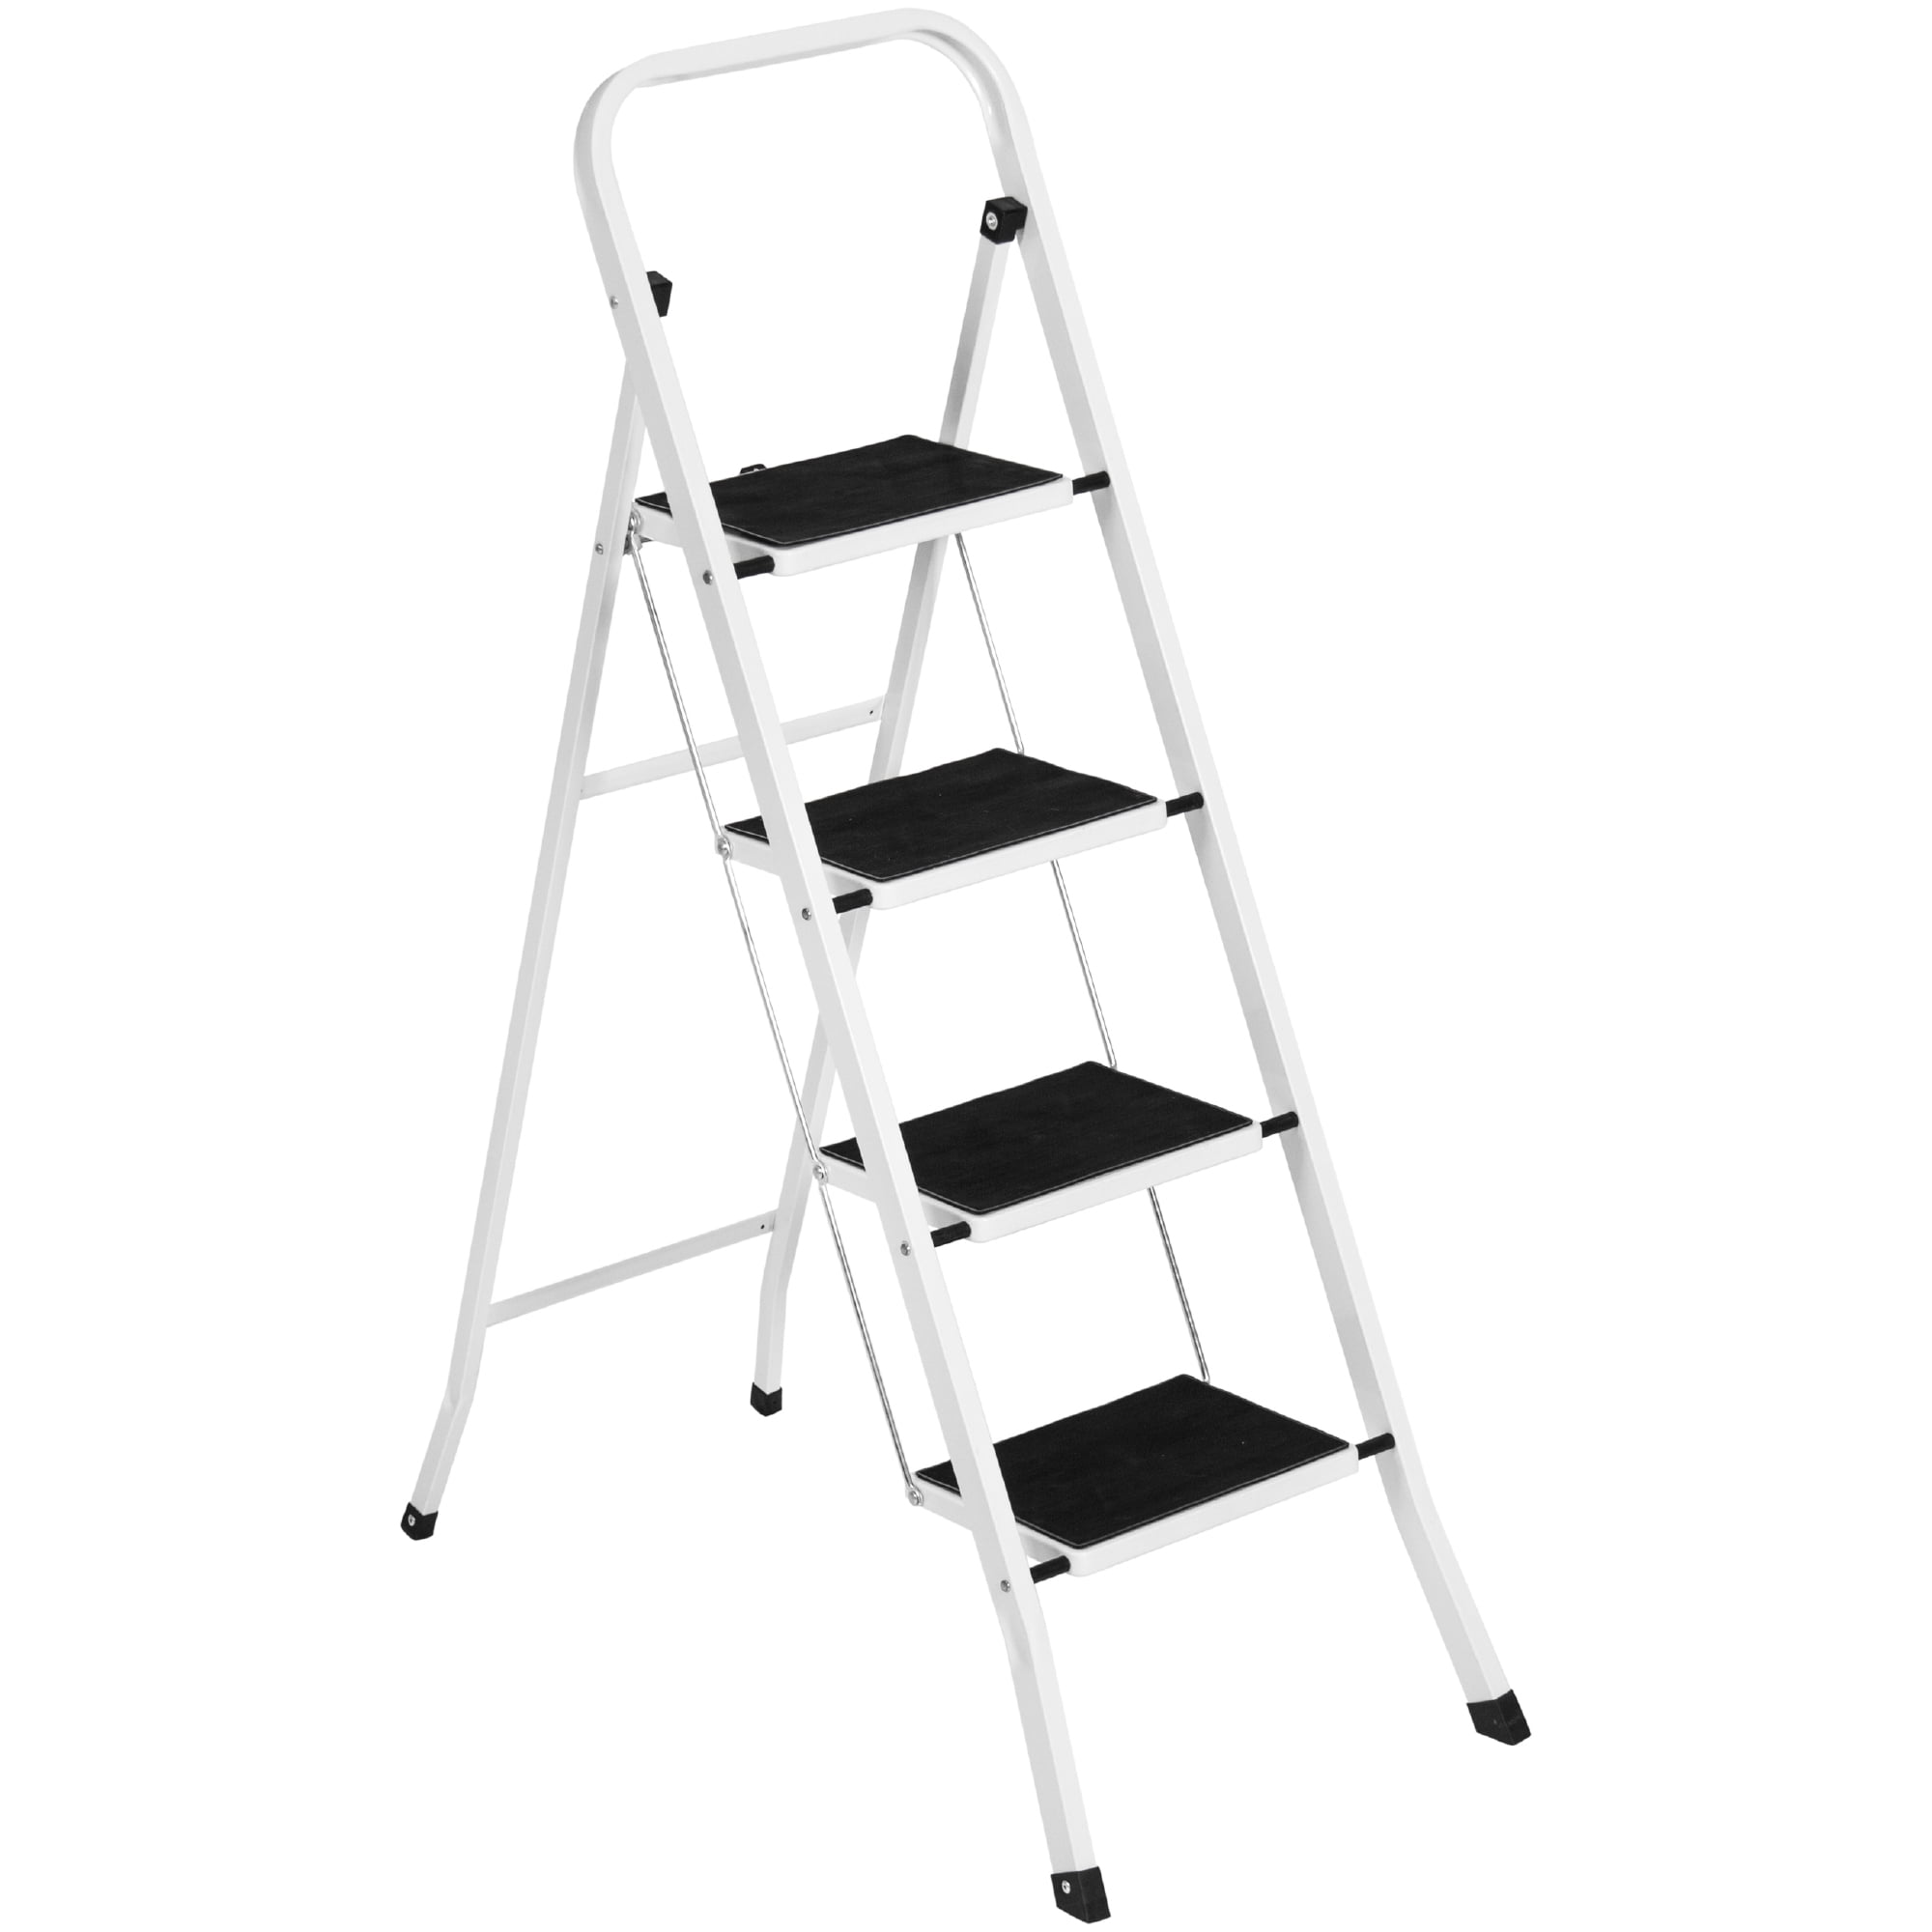 4 Step Ladder Folding Steel Step Stool Anti-slip  330Lbs Capacity Black & White 